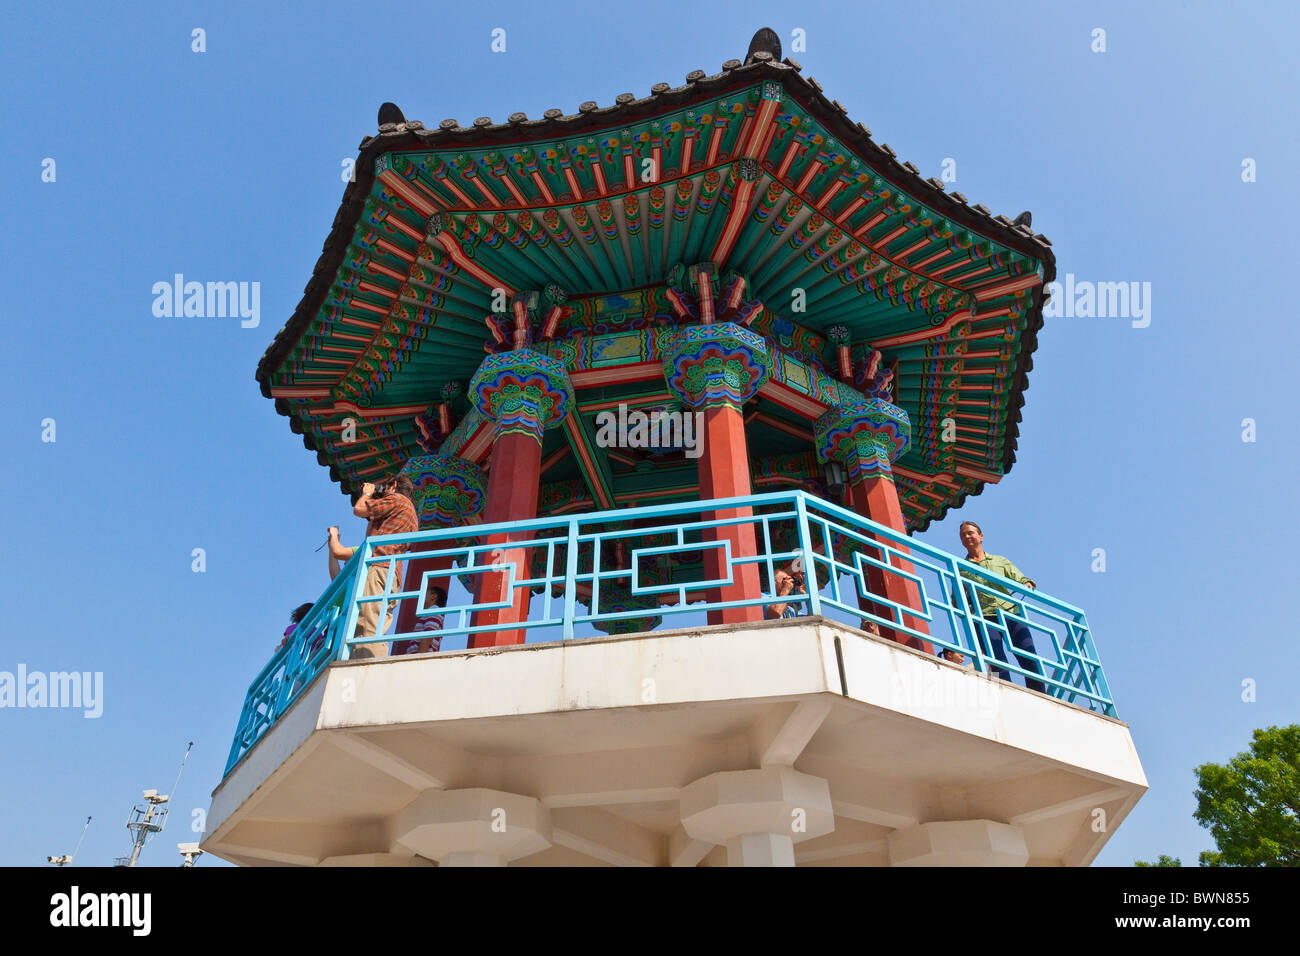 Pagoda Observation Platform overlooking UN buildings and North Korea, DMZ Demilitarized Zone, South Korea. JMH3833 Stock Photo